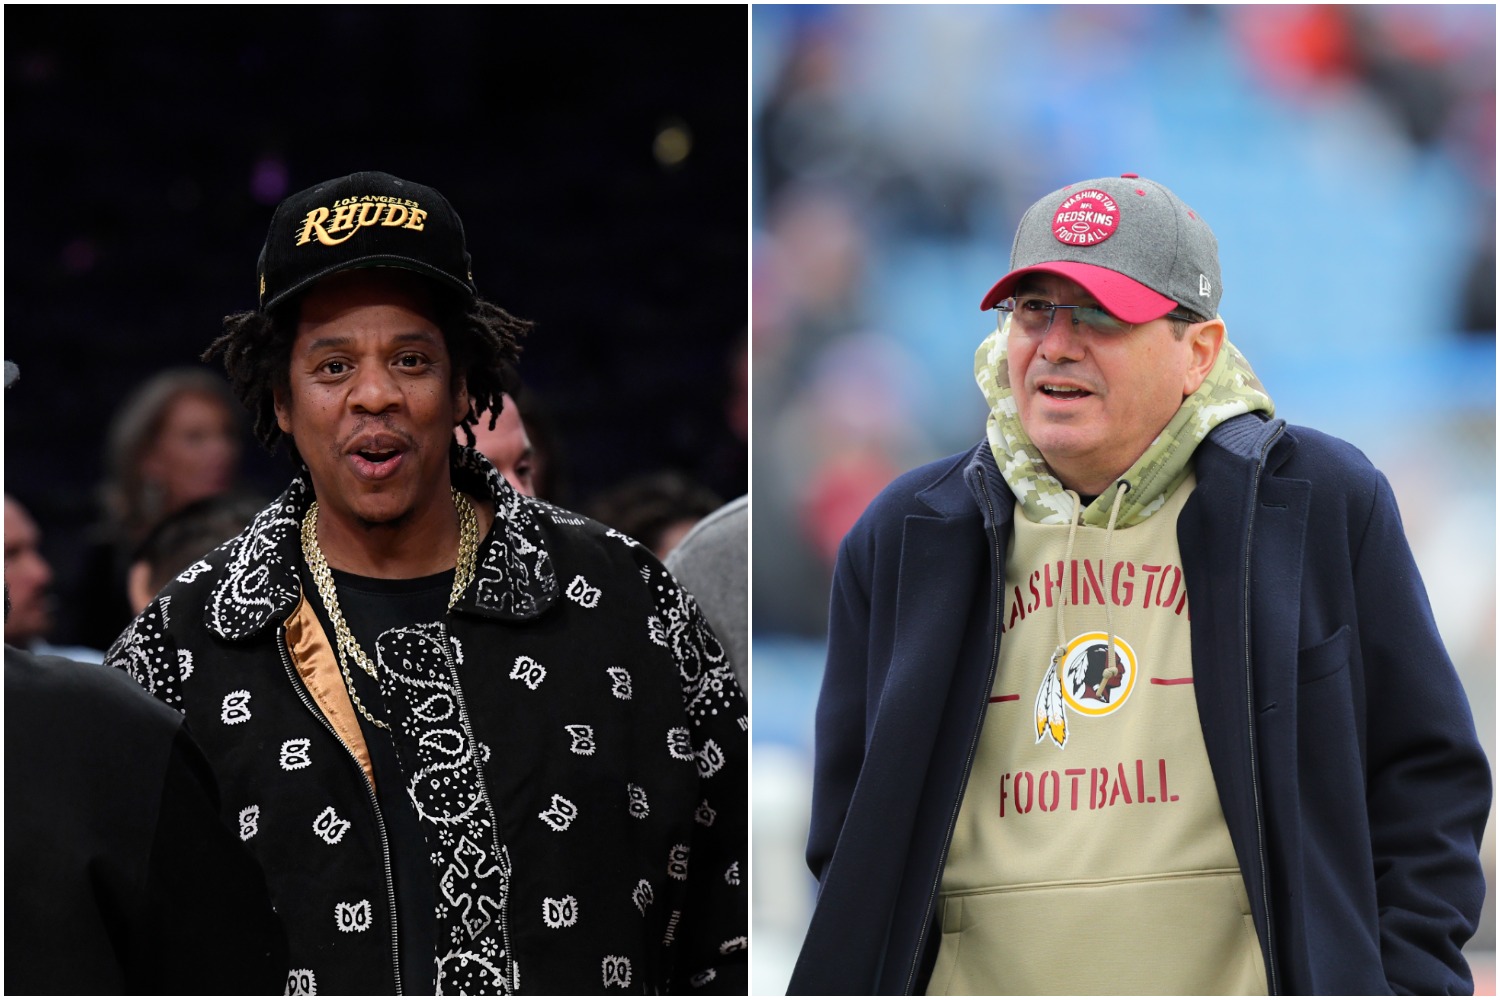 Legendary rapper Jay-Z next to Washington Football Team owner Dan Snyder.